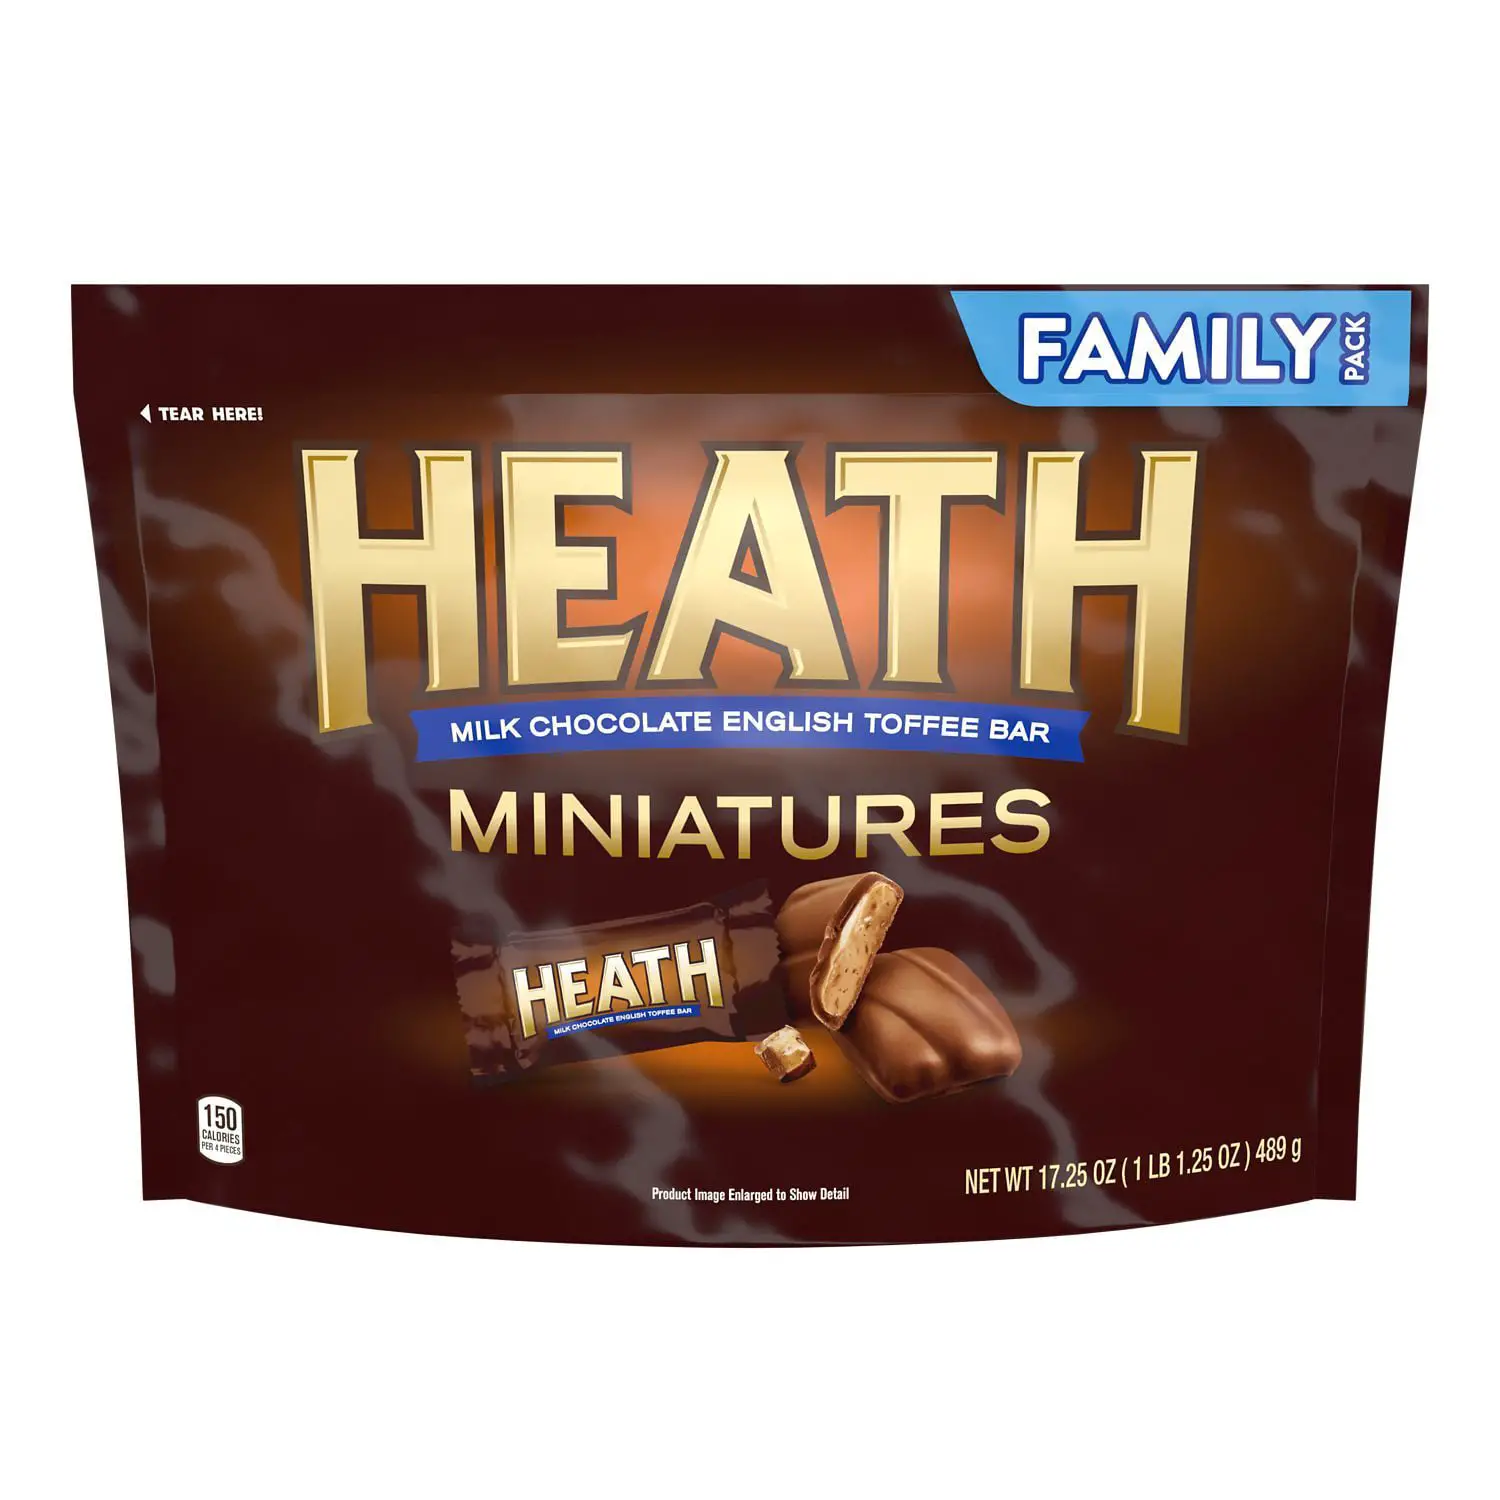 HEATH, Miniatures Milk Chocolate English Toffee Candy Bars ...